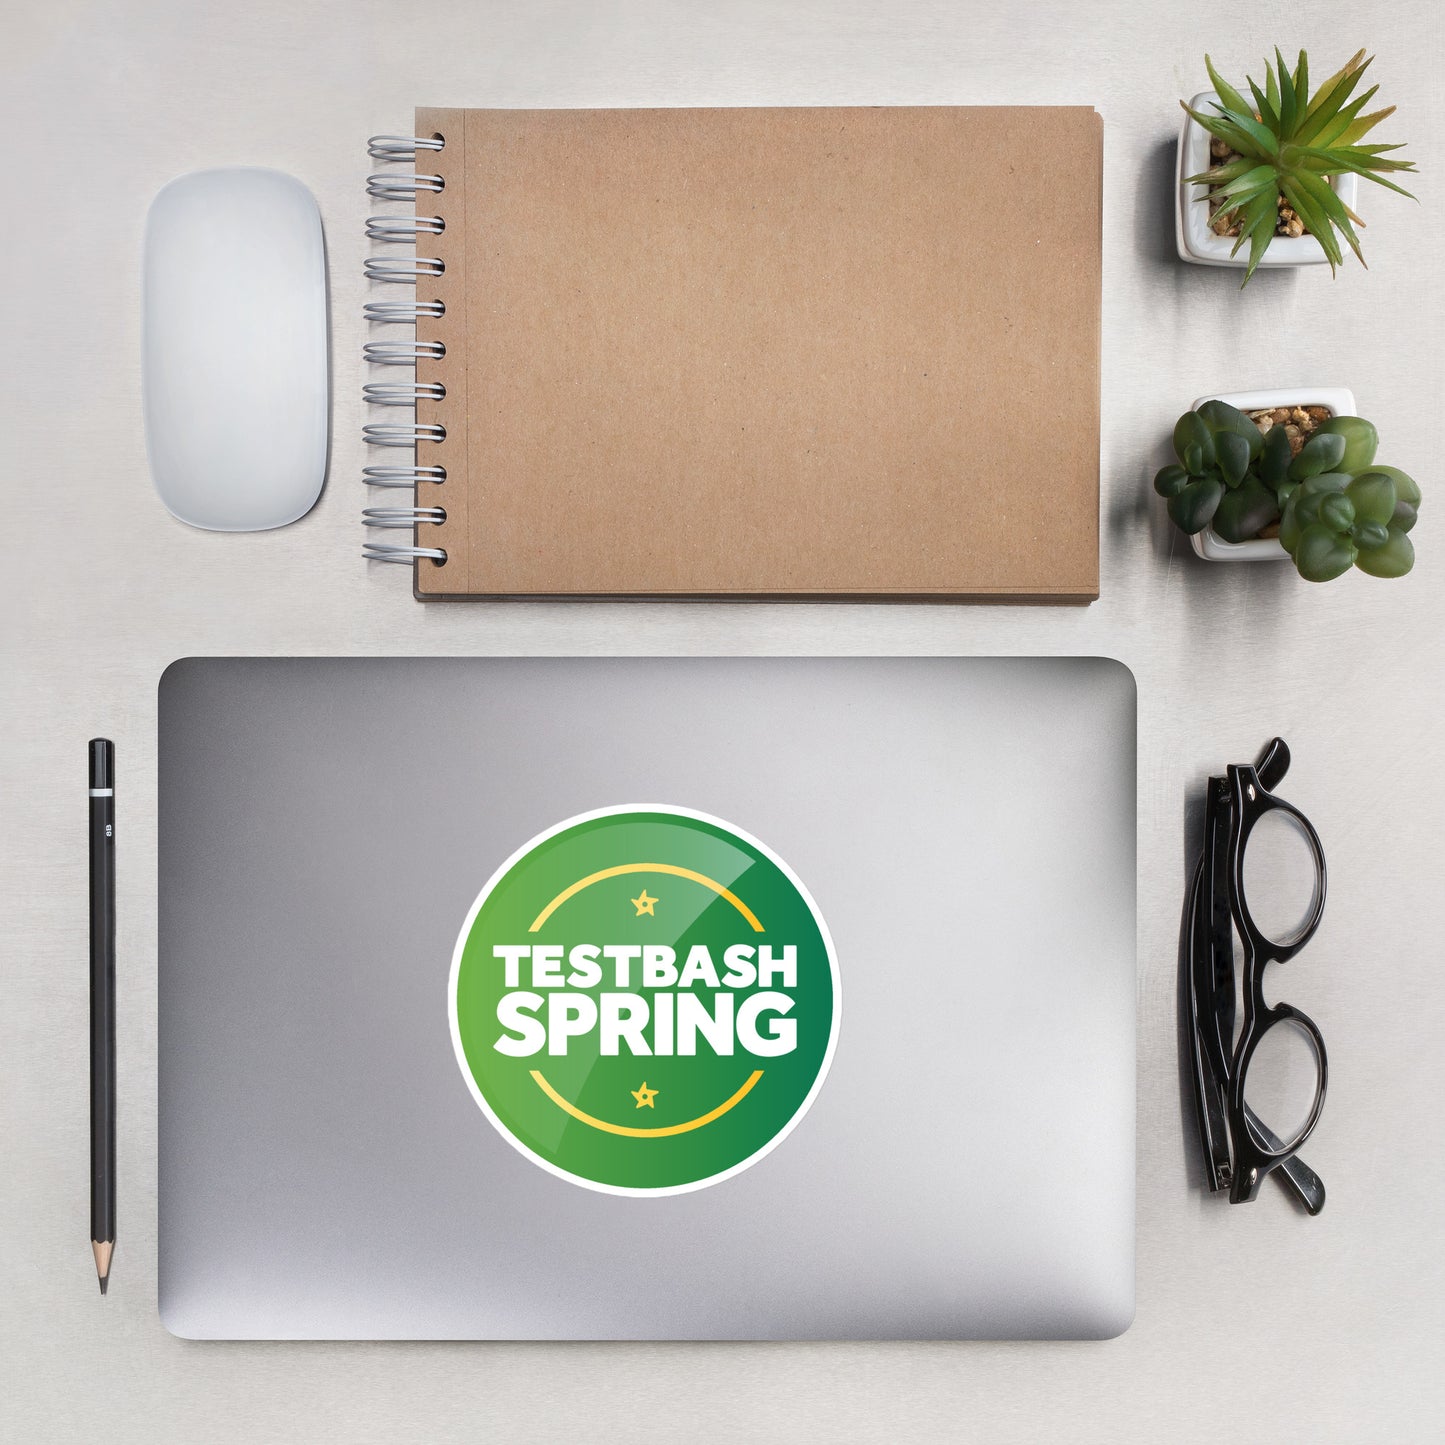 TestBash Spring Sticker